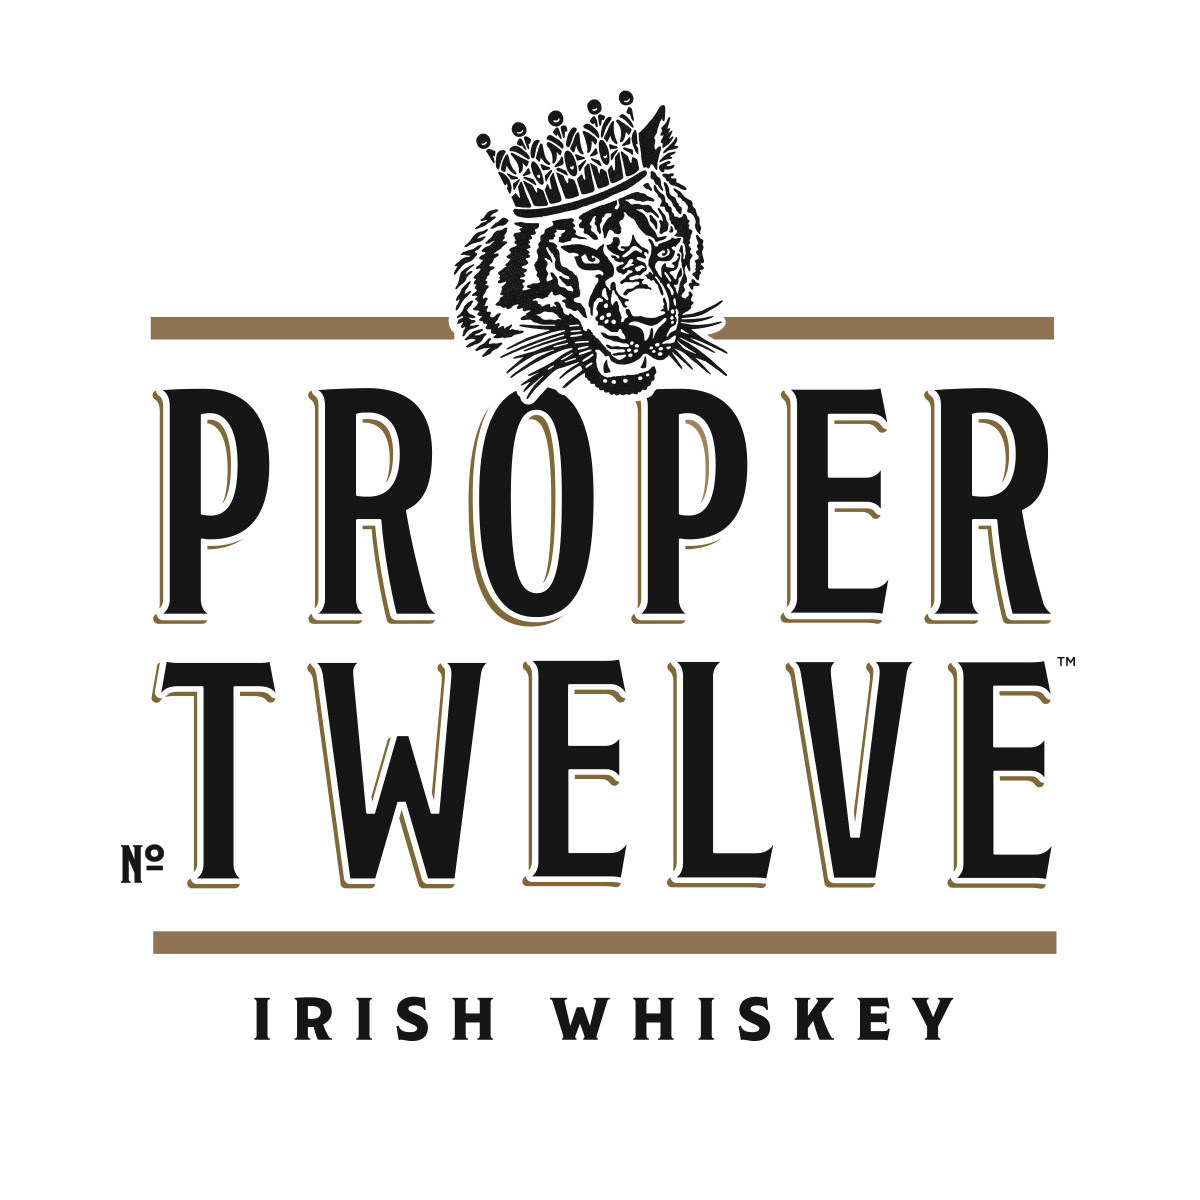 Eire born spirits proper no twelve irish whiskey logo